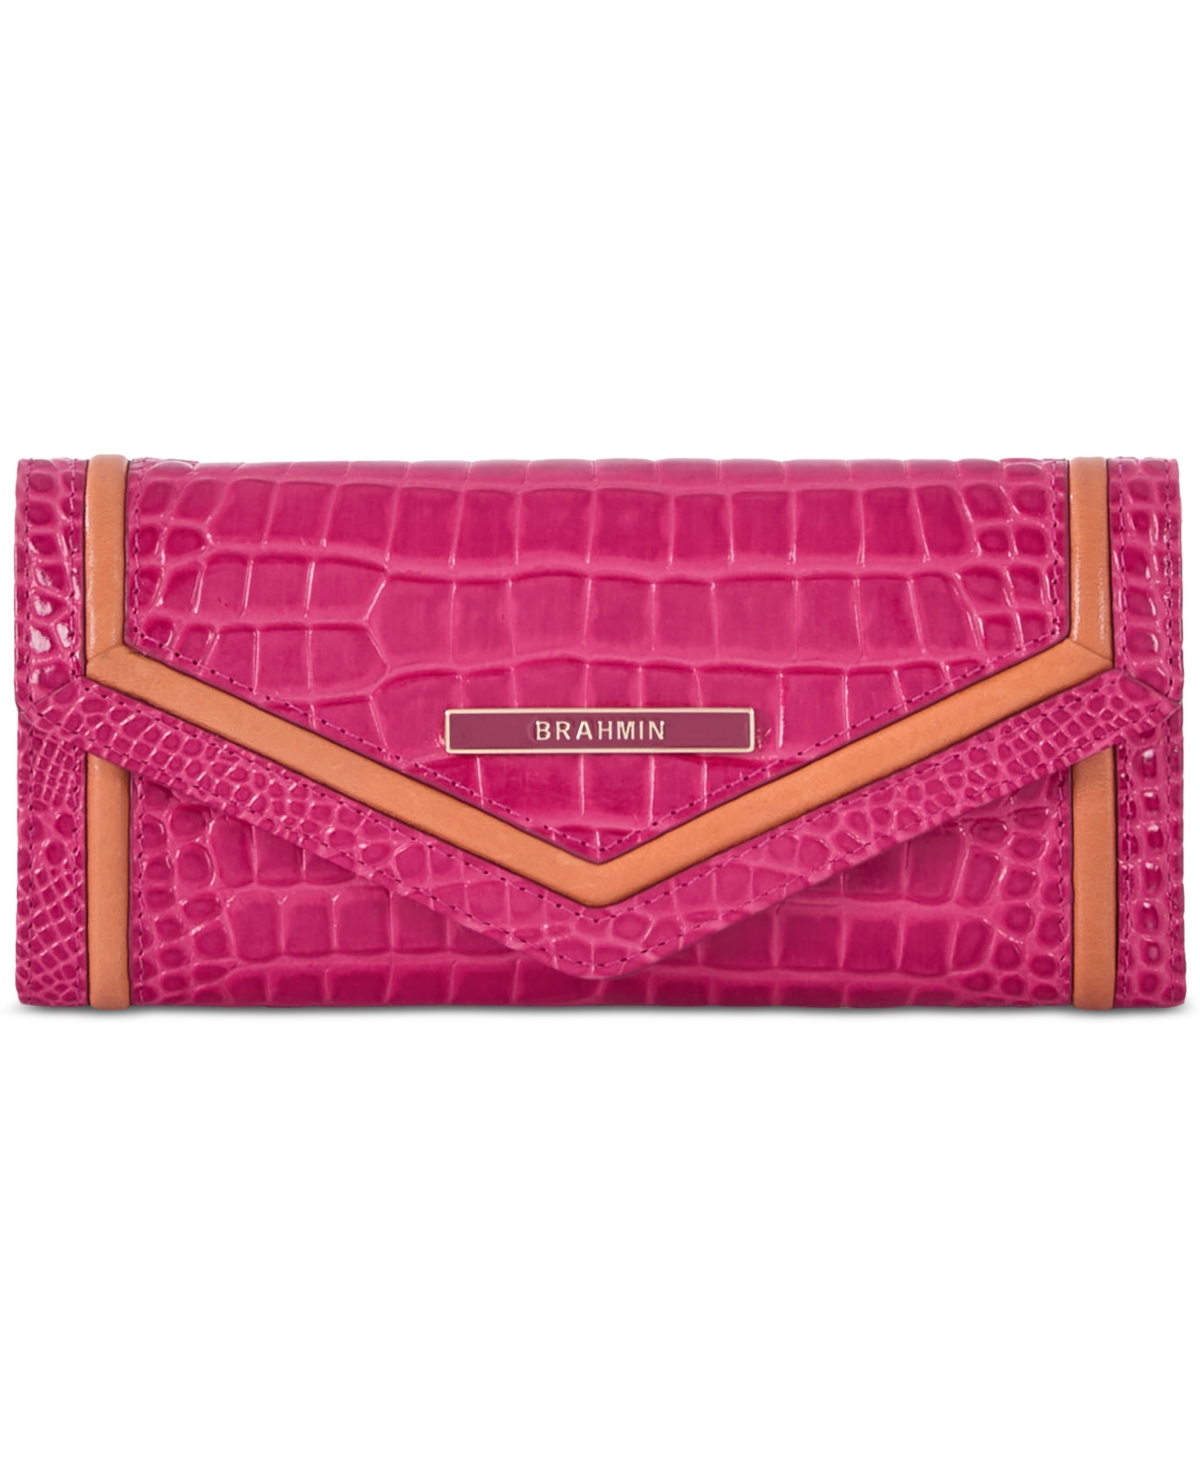 Shop Brahmin Veronica Paradise Pink Darlington Leather Signature Wallet